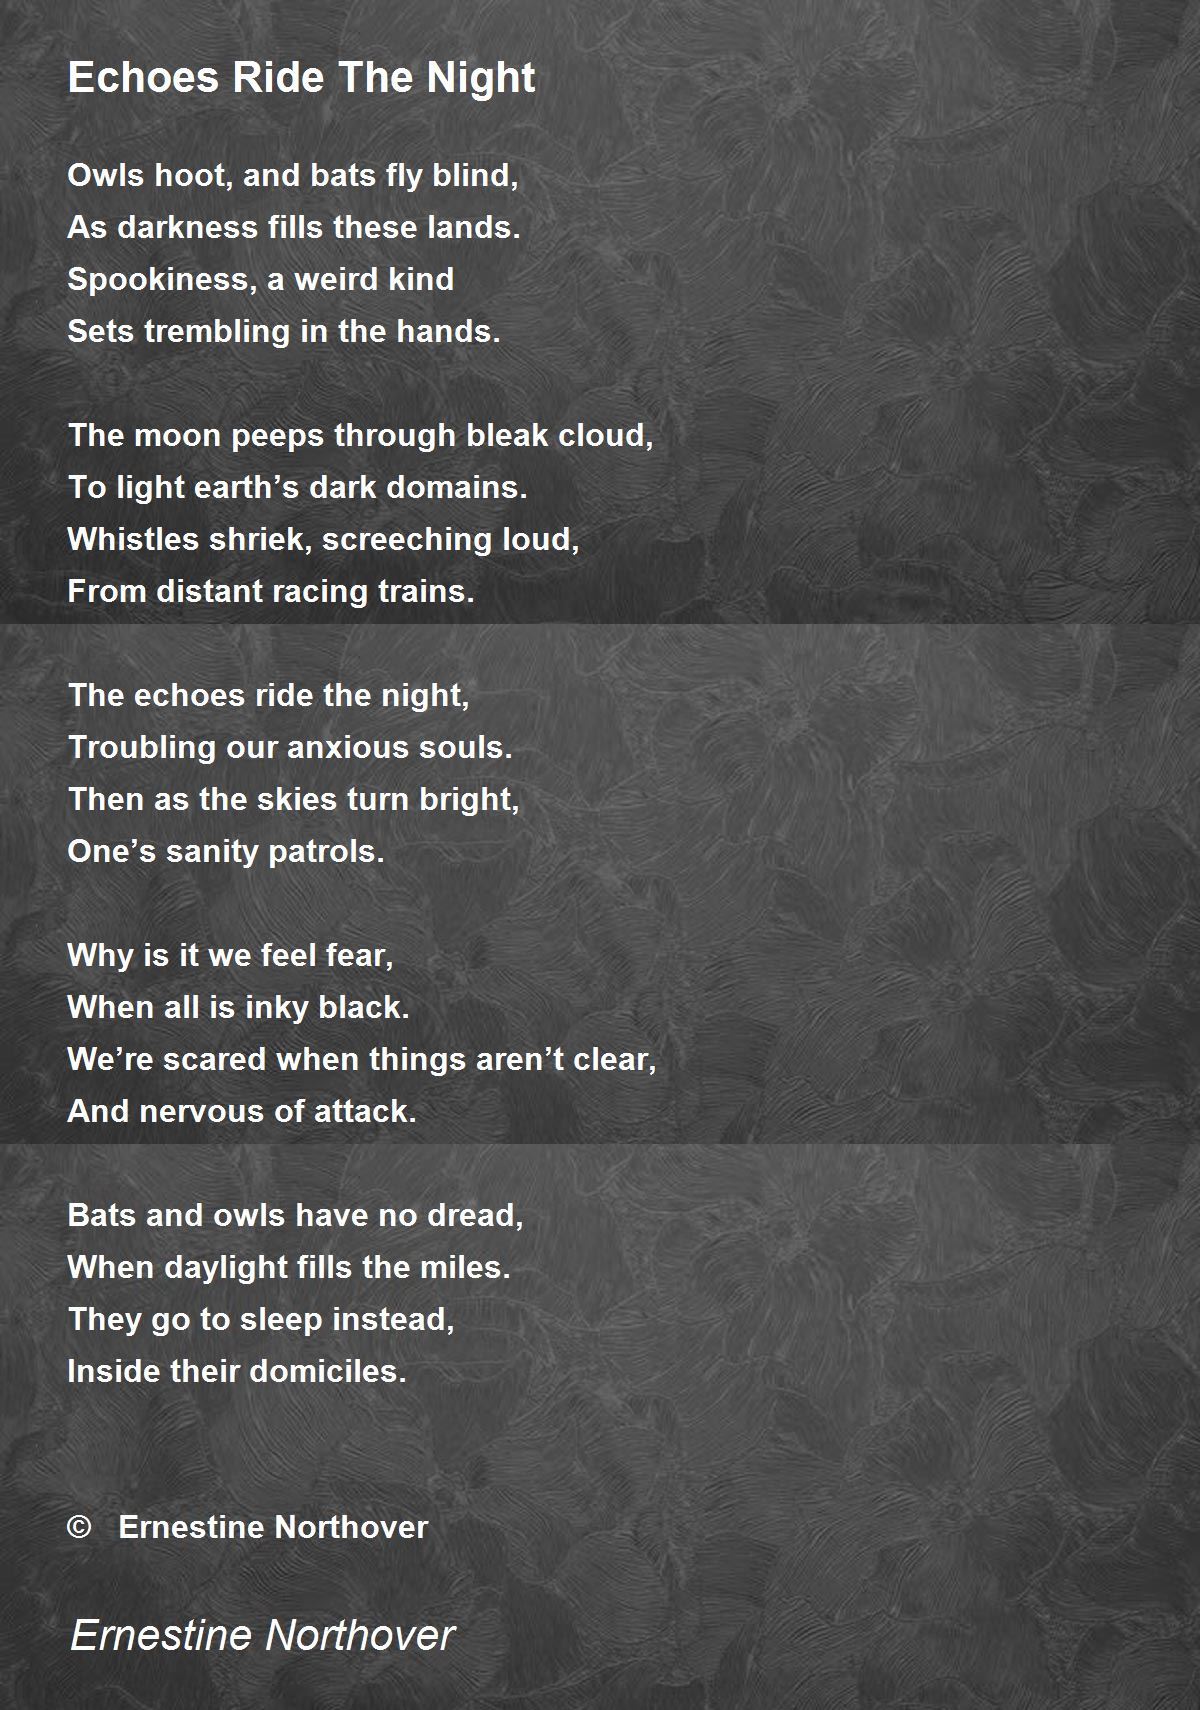 Echoes Ride The Night - Echoes Ride The Night Poem by Ernestine Northover